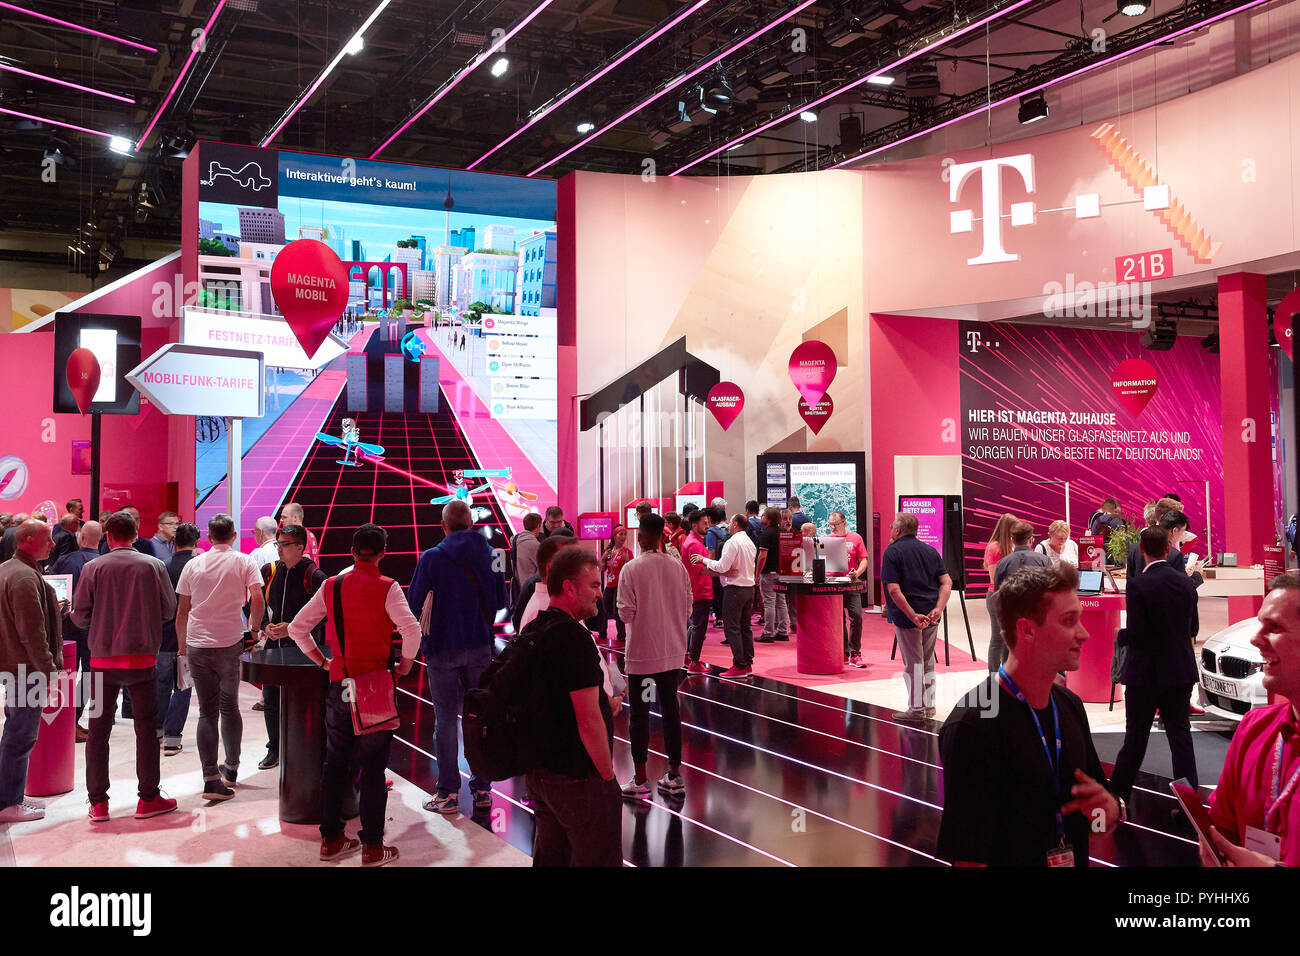 Berlin, Germany - Deutsche Telekom AG's booth at IFA 2018. Stock Photo